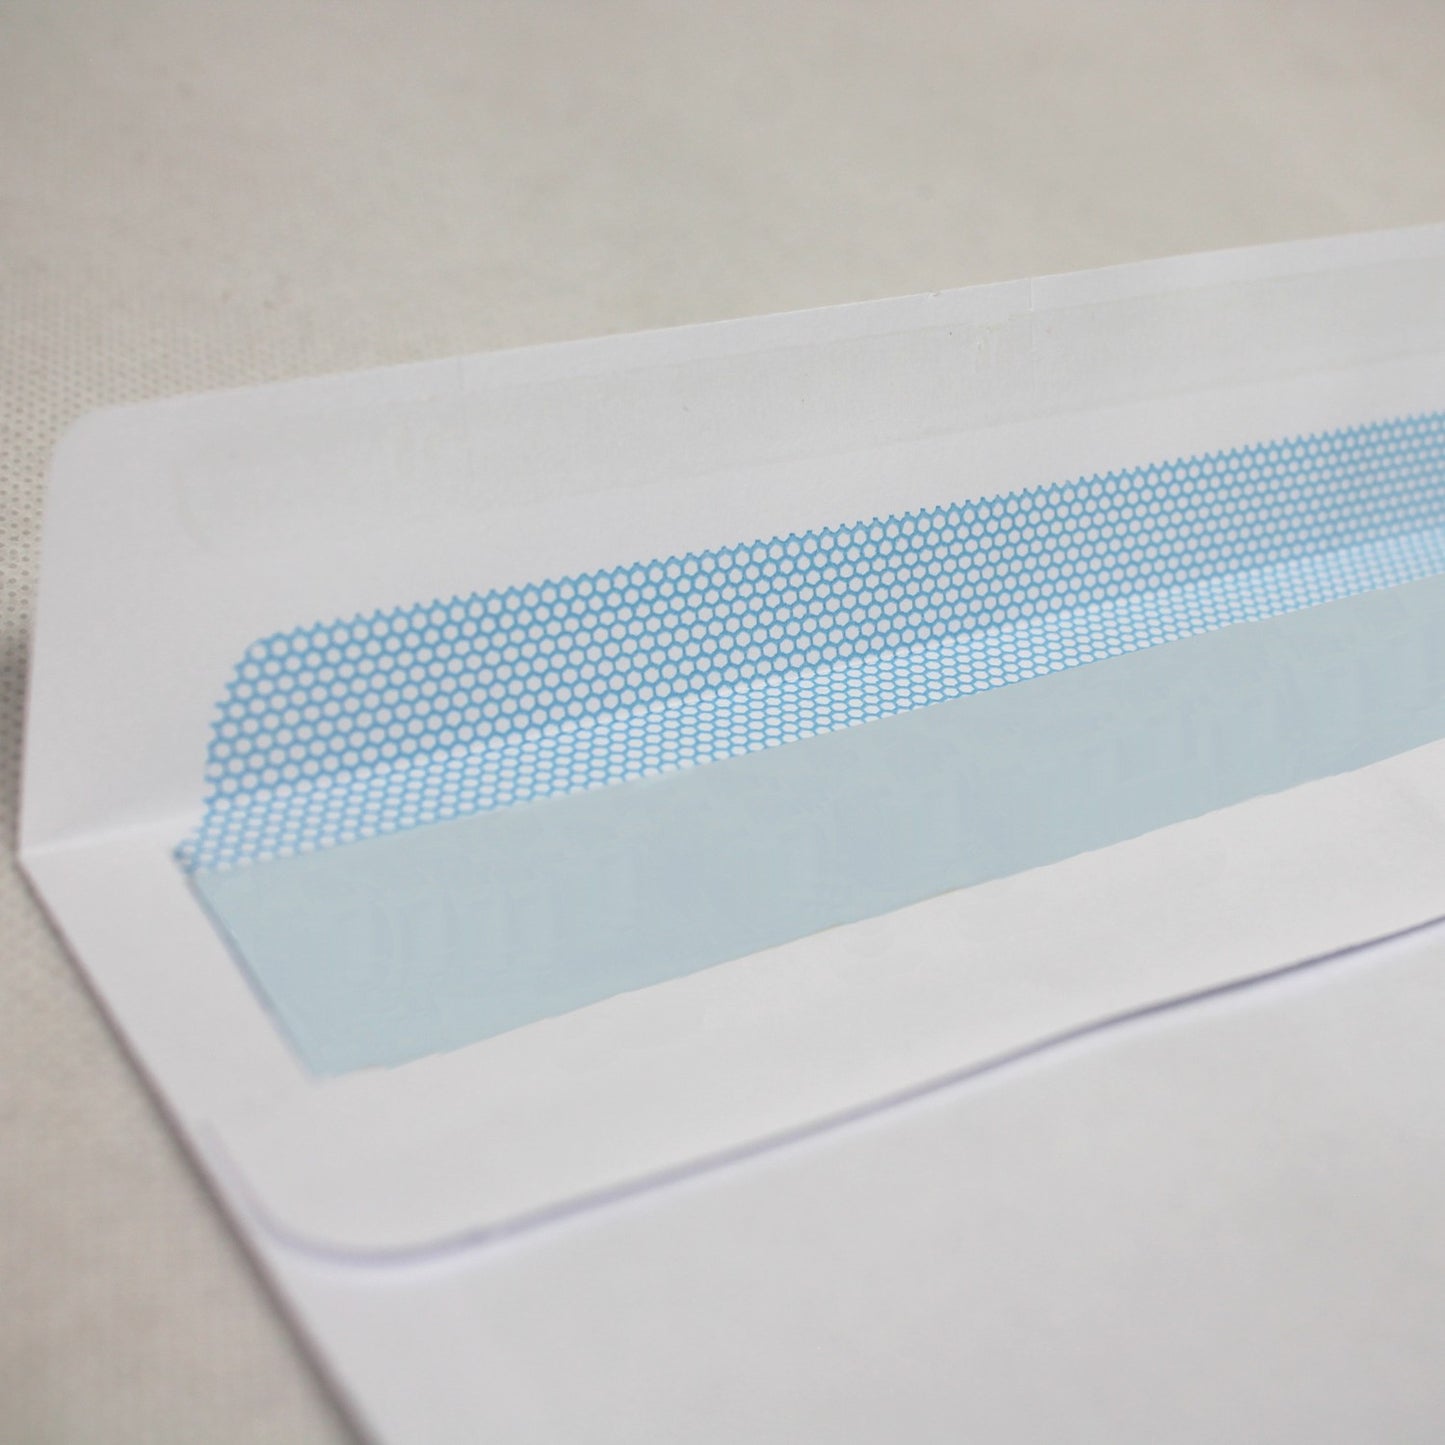 110x220mm DL White Self Seal Envelopes (None Window)